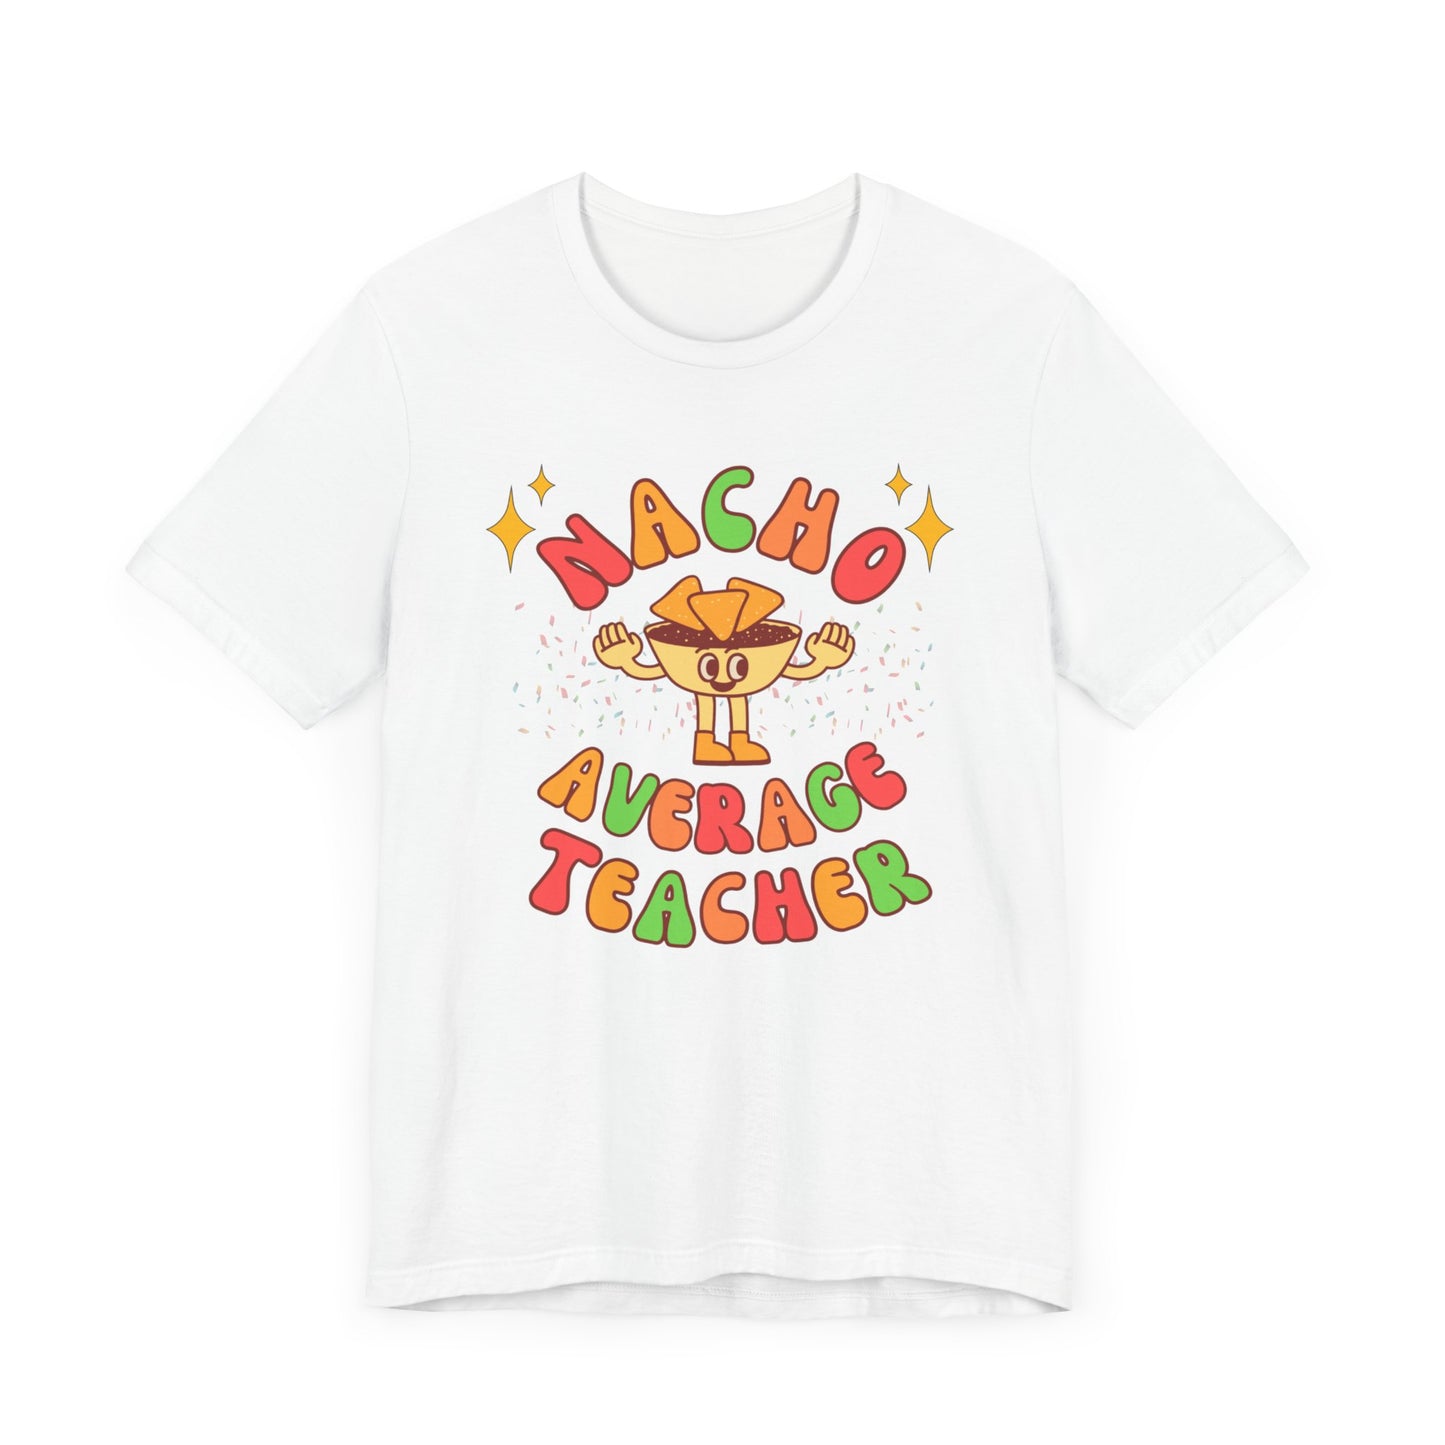 Nacho Average Teacher Tee